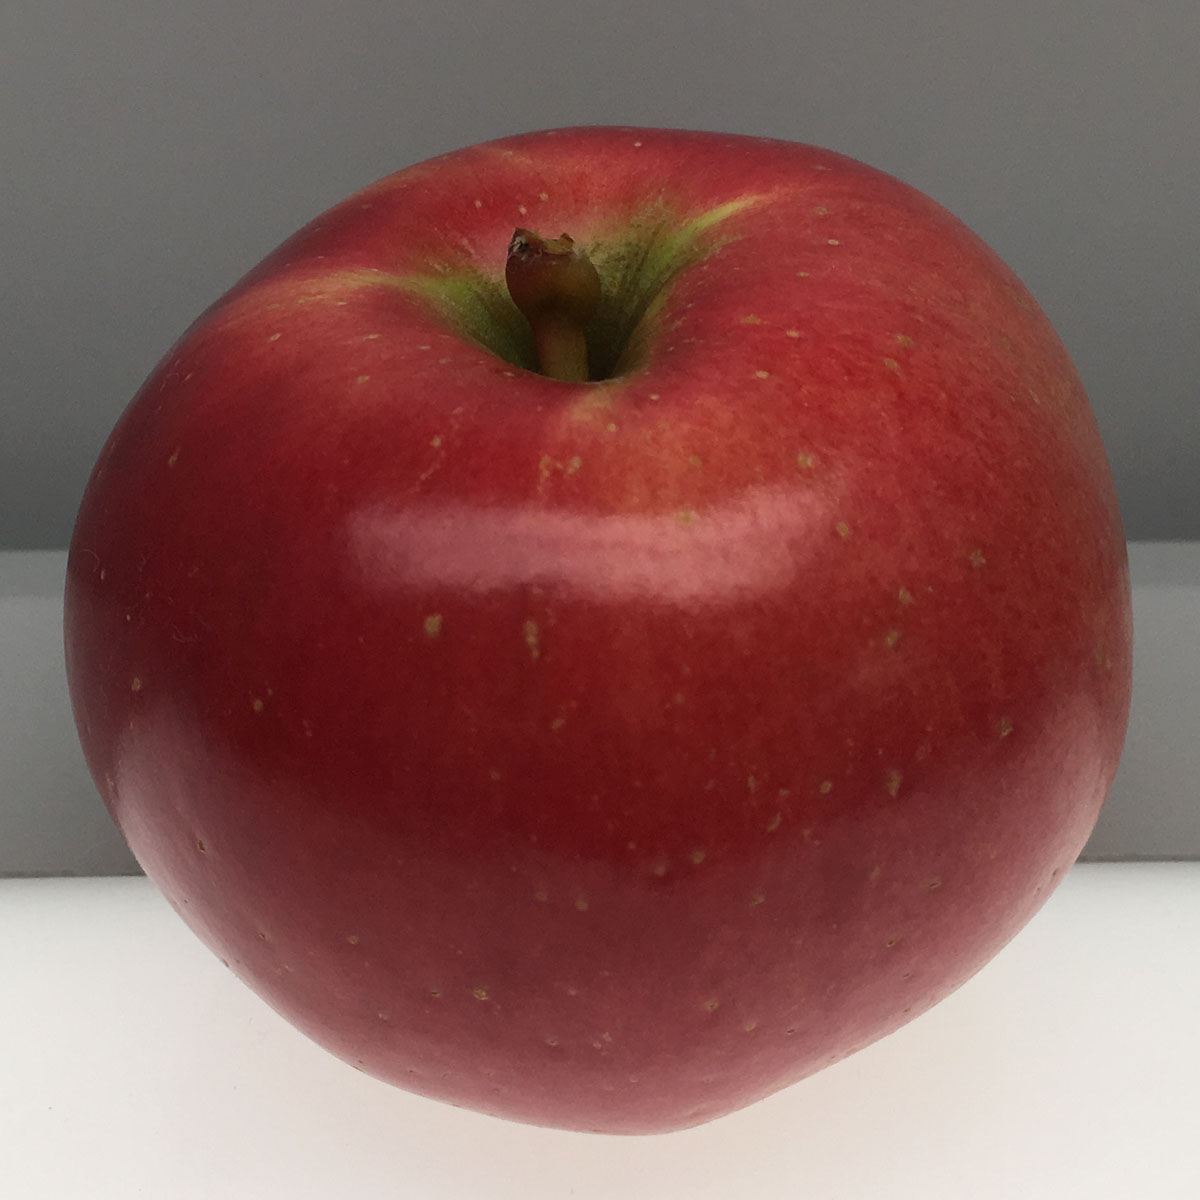 Melrose apple